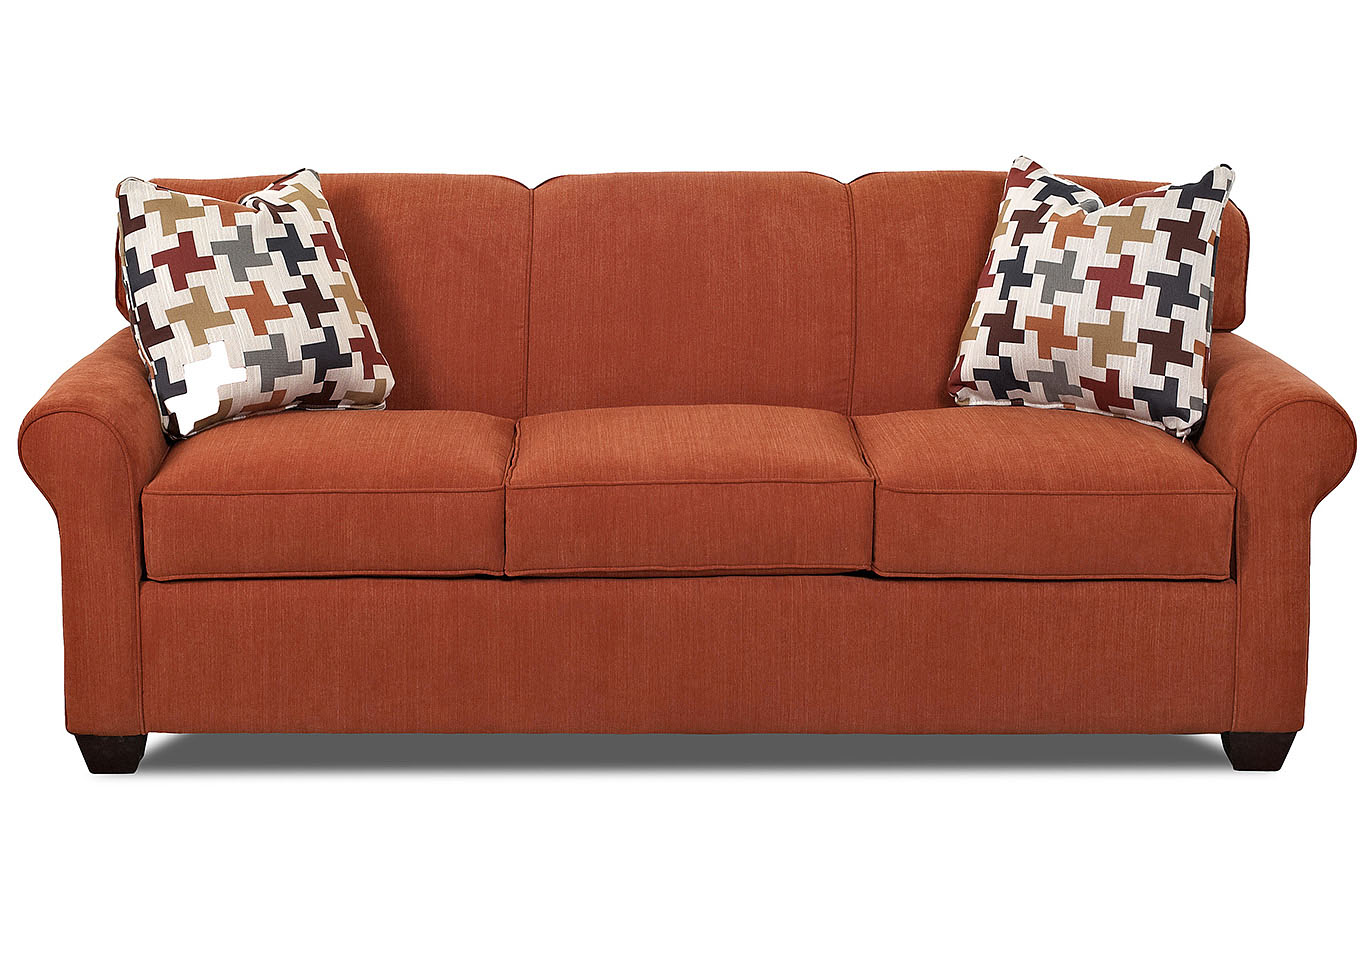 Mayhew Red Stationary Fabric Sofa,Klaussner Home Furnishings